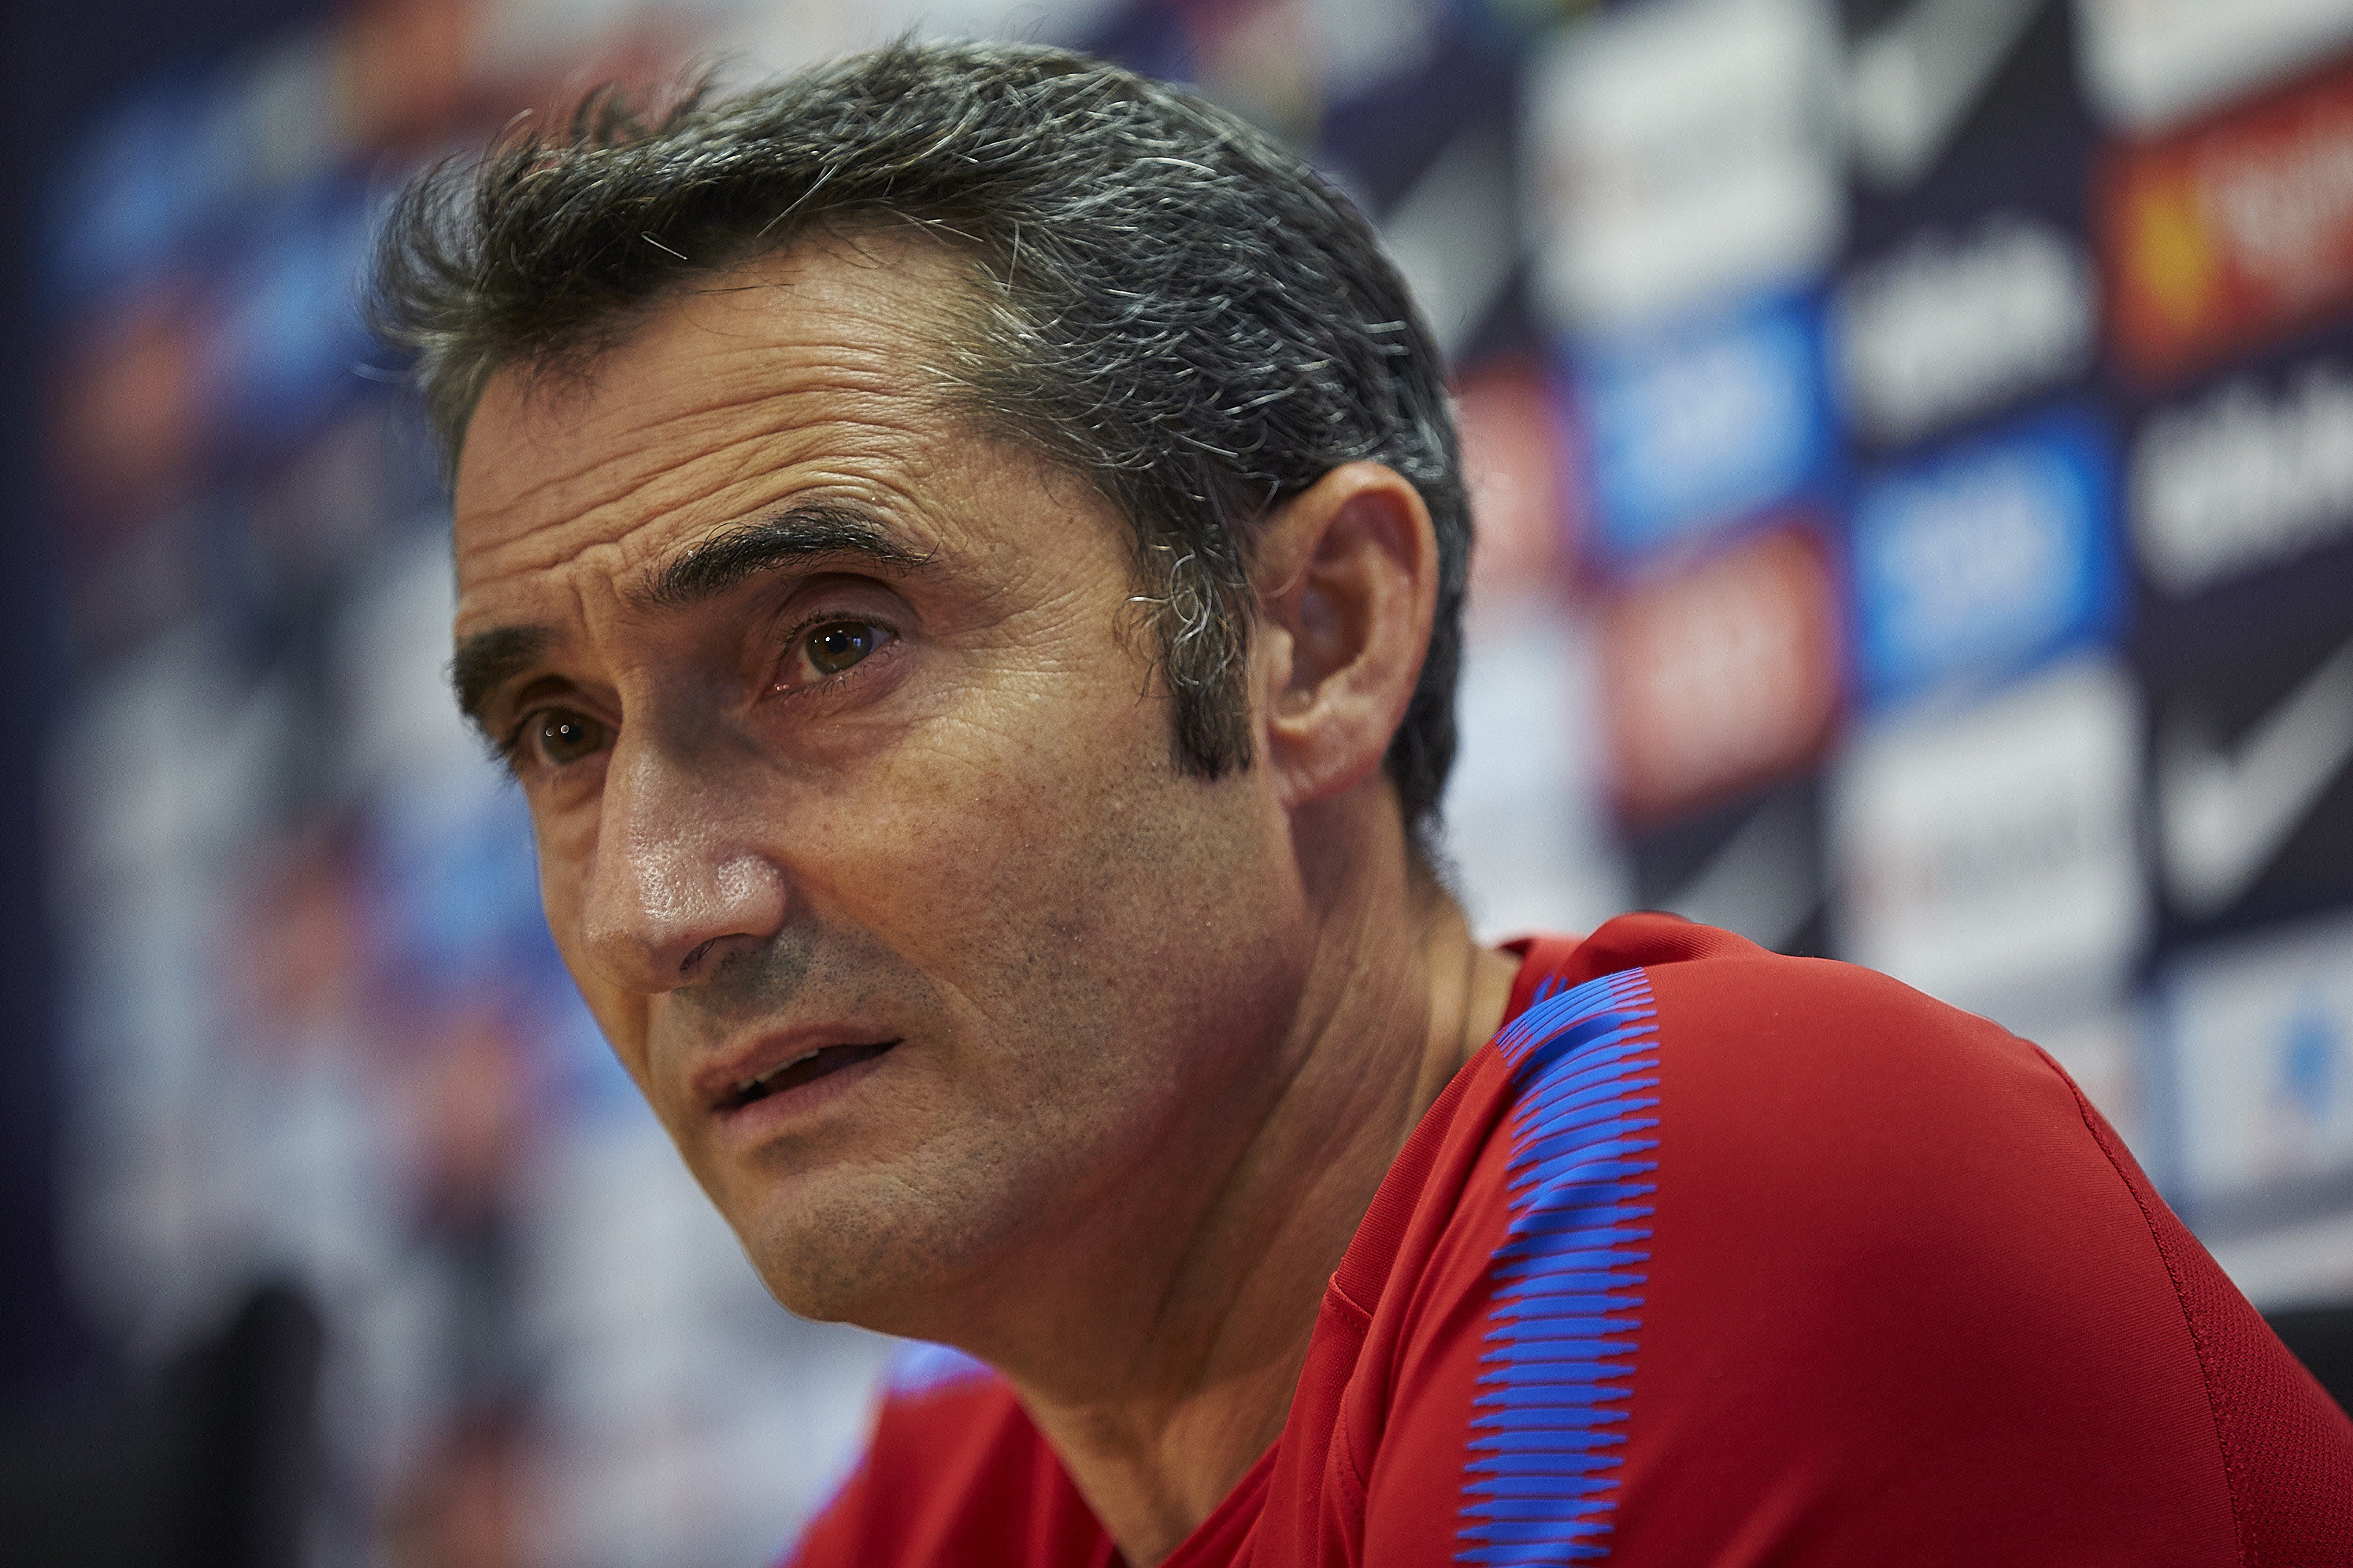 Valverde: "Tenim moltes esperances dipositades en Dembélé"